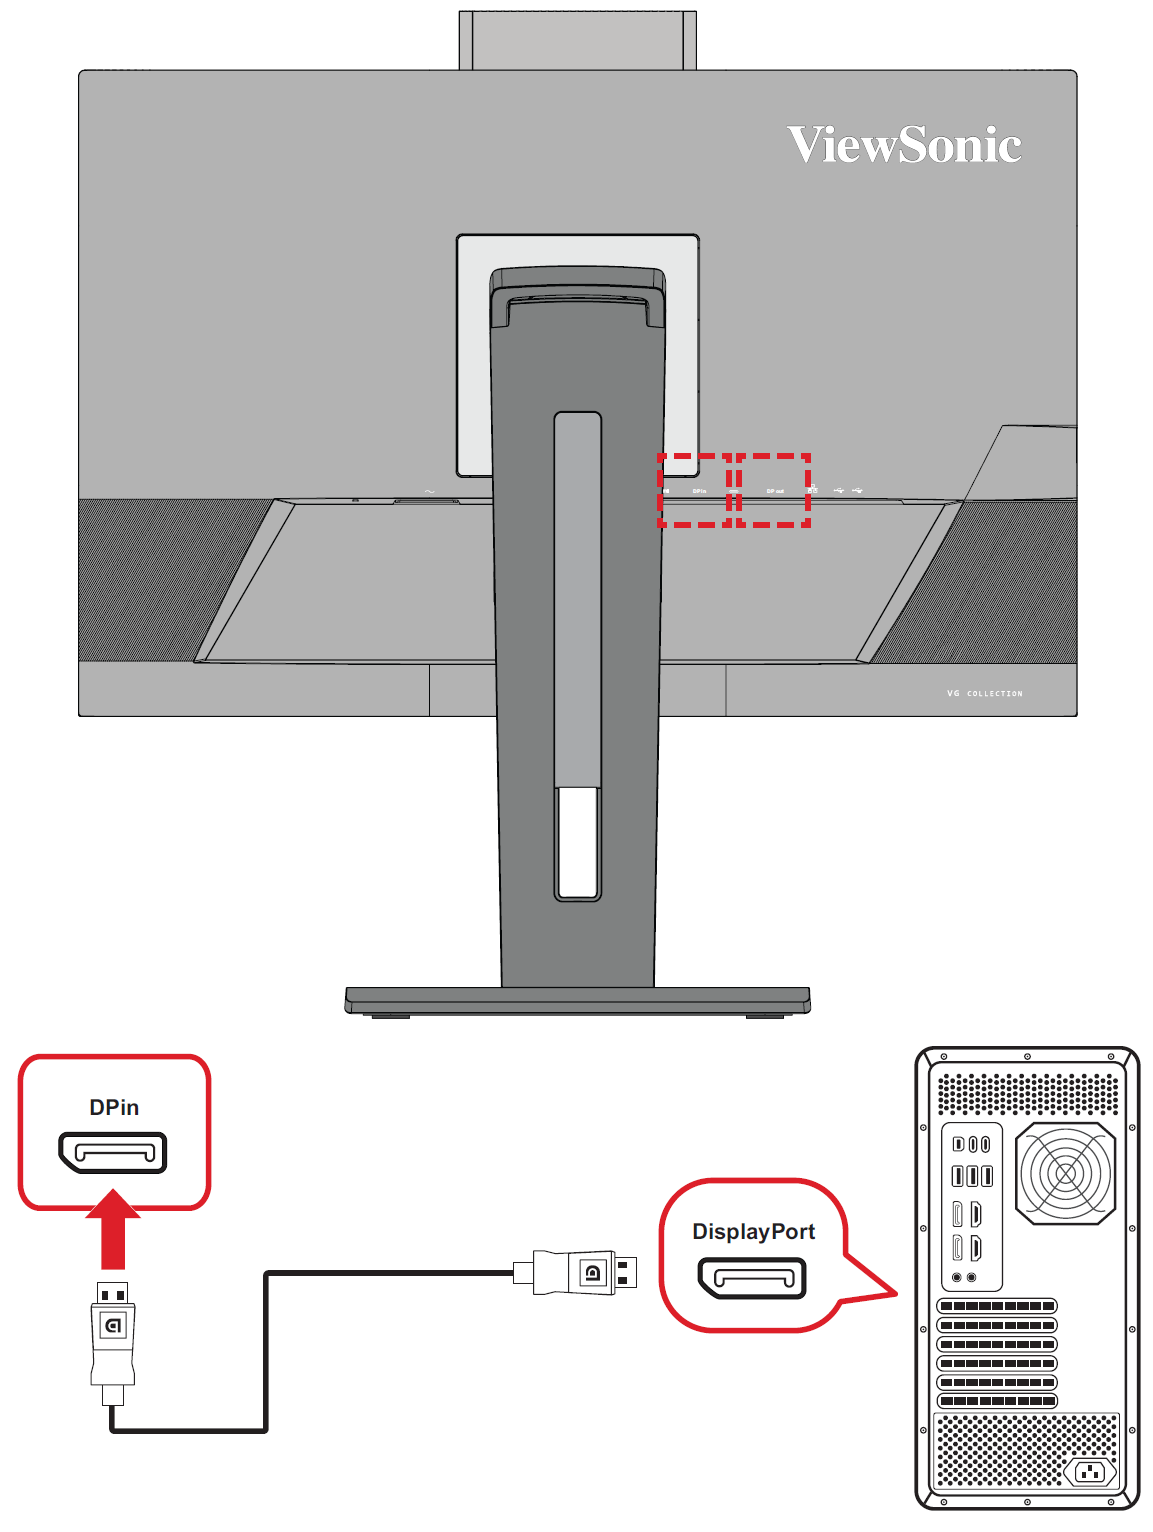 Connecting to DisplayPort